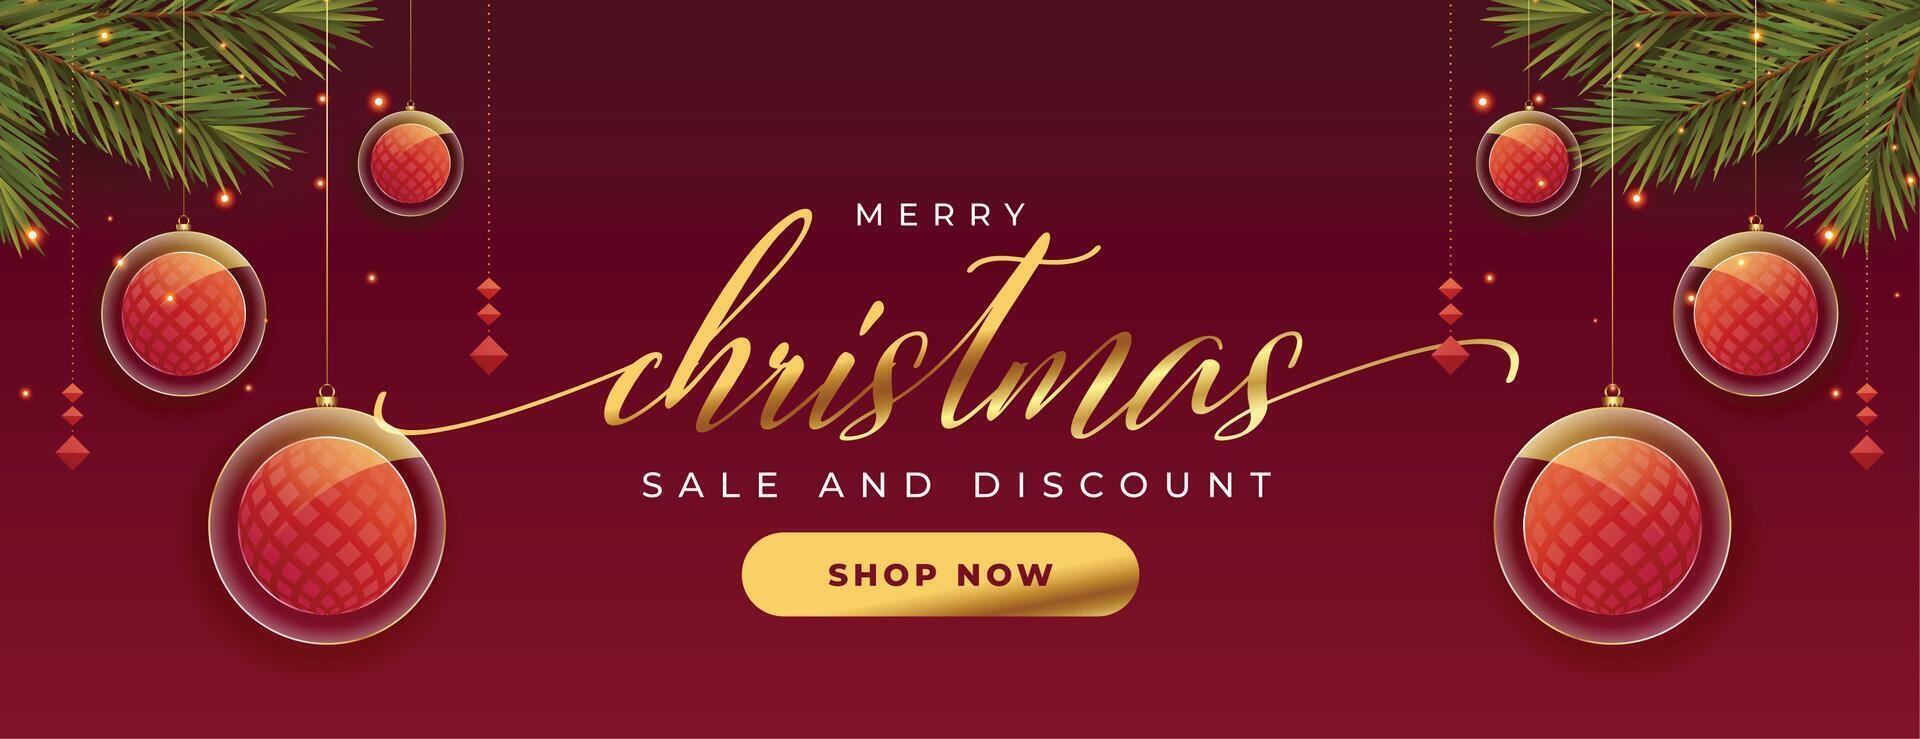 merry christmas festival sale banner for promotion vector